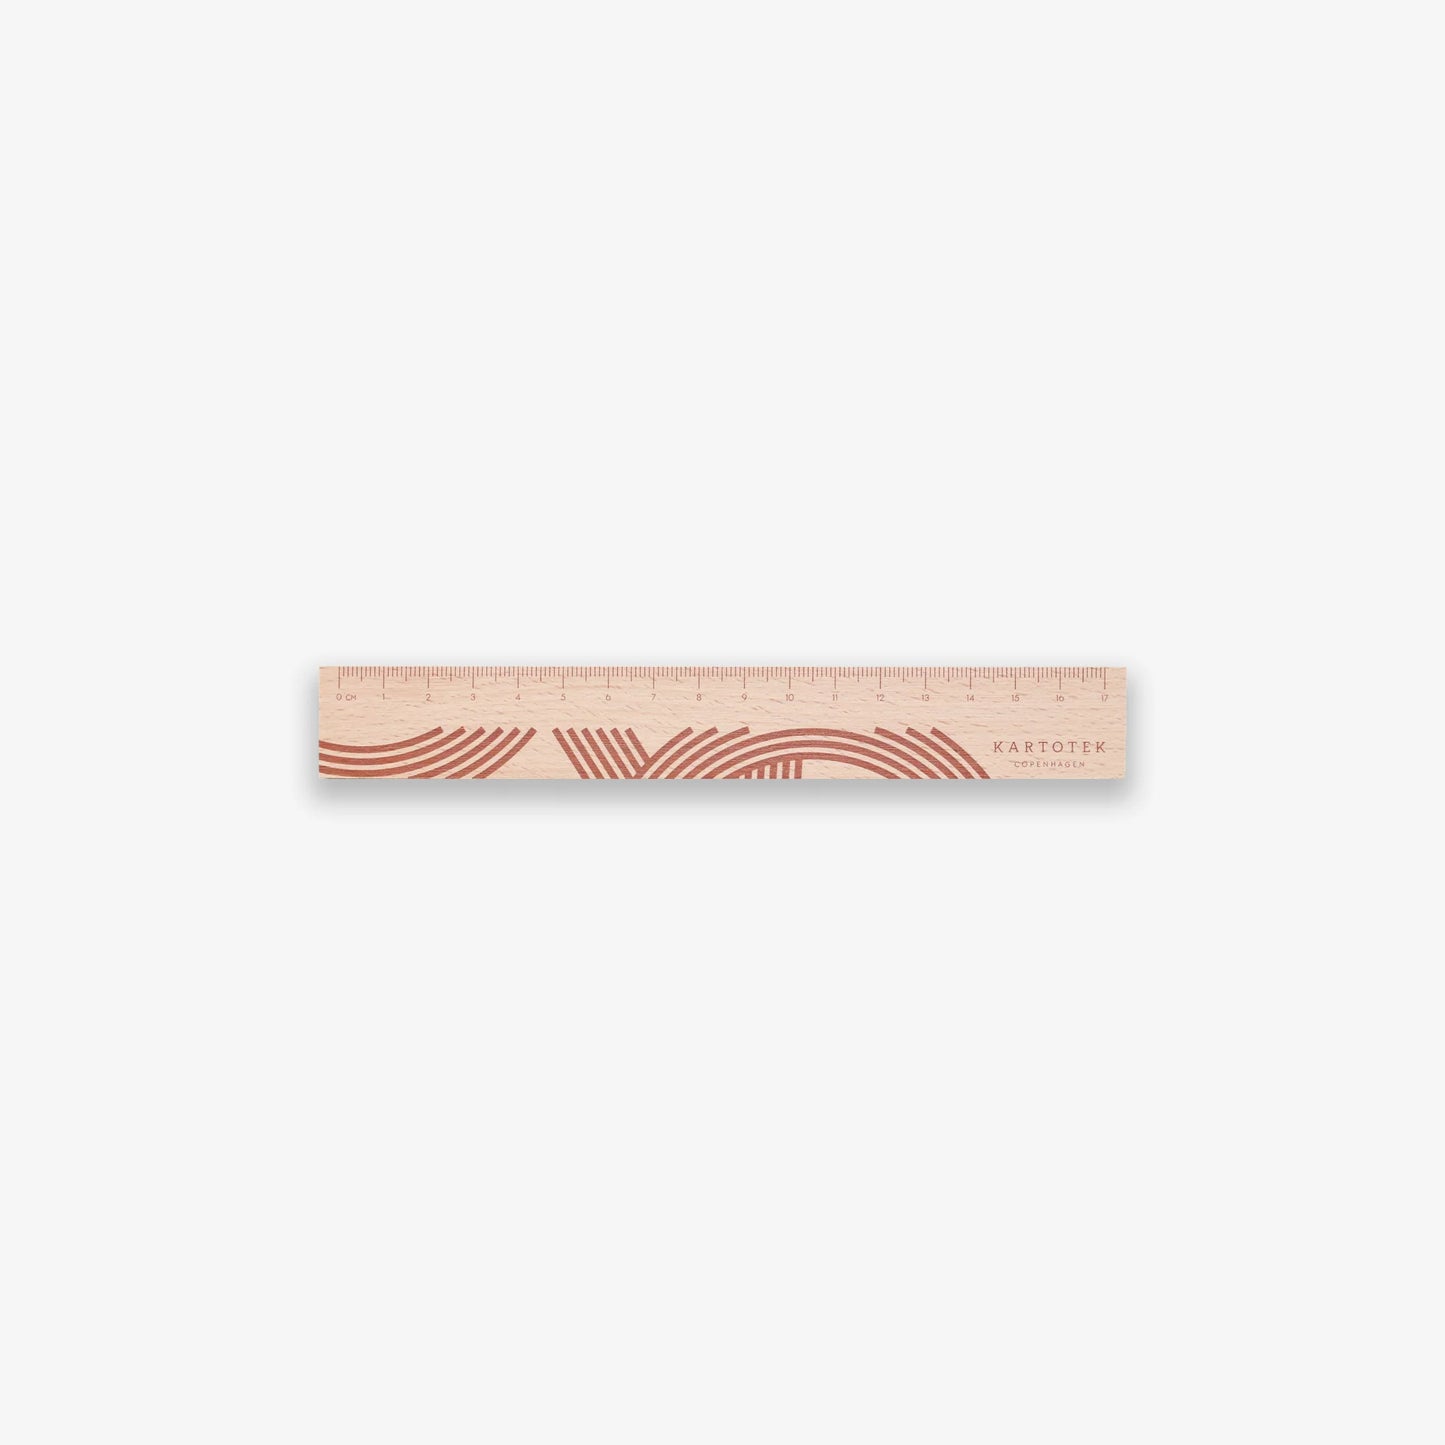 Kartotek wooden ruler, 17cm or 30cm